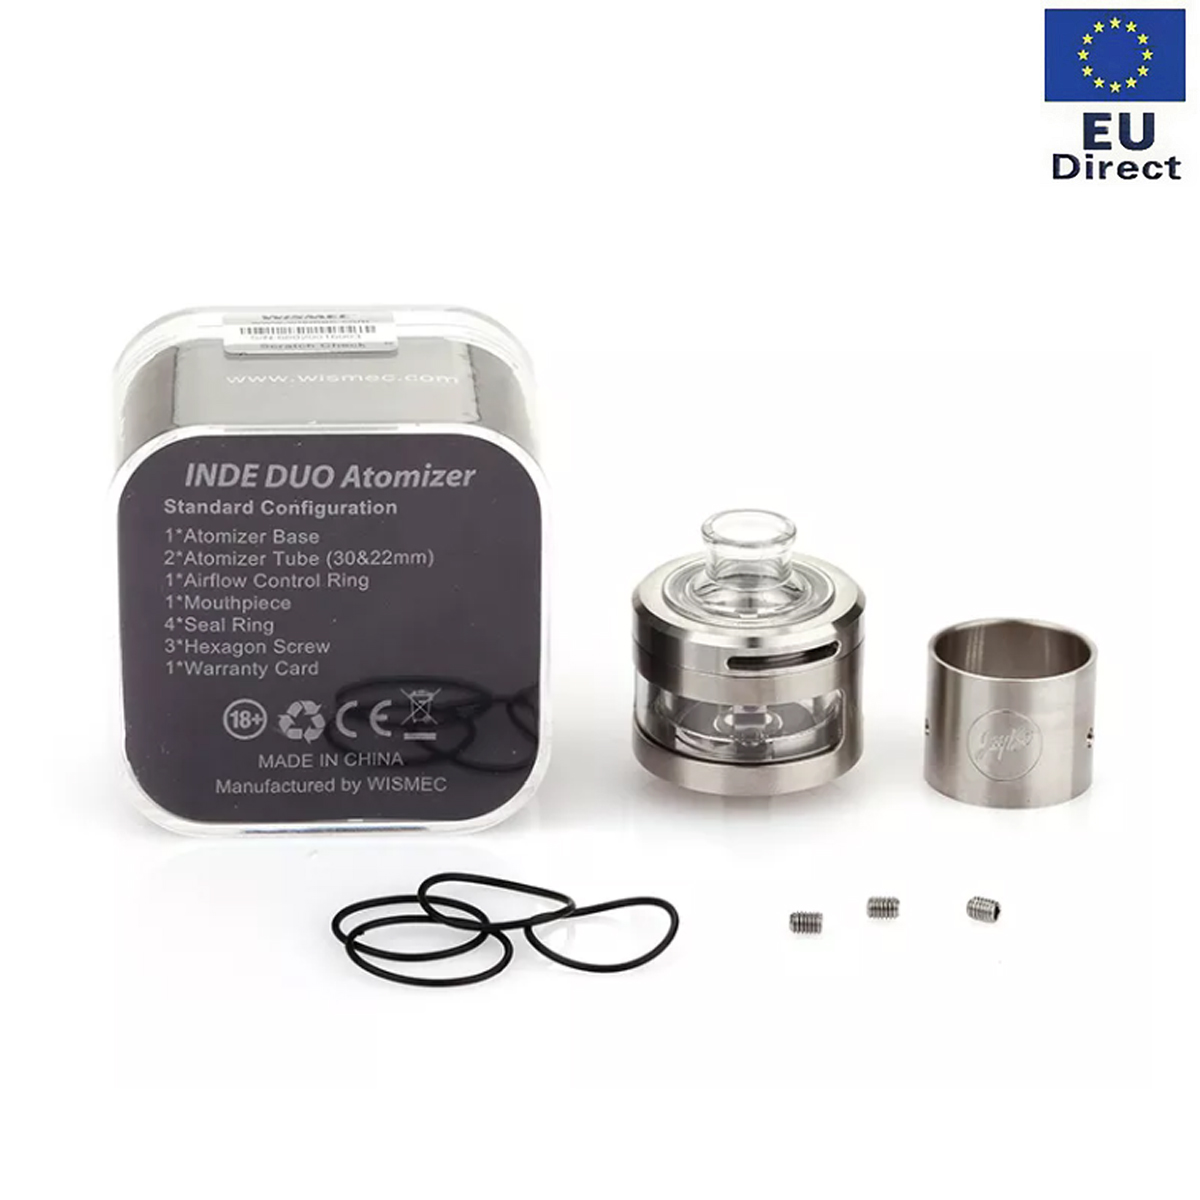 [EU Shipping]Authentic Wismec INDE DUO RDA Atomizer - Silver